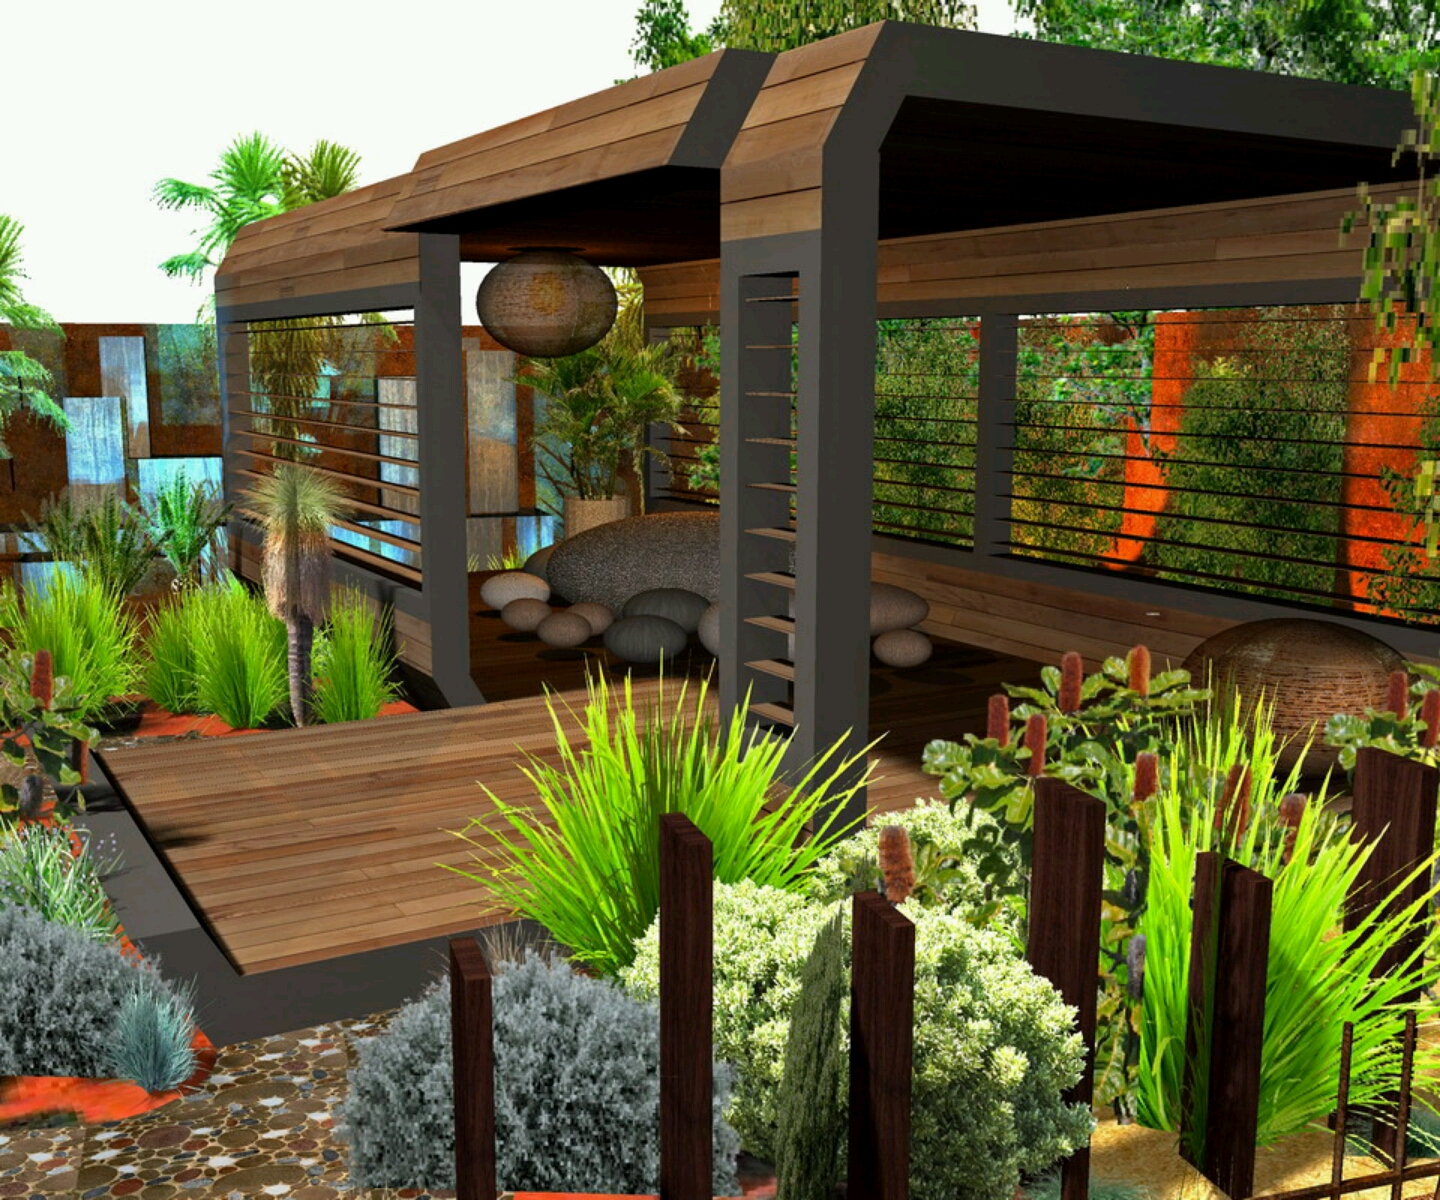 New home designs latest.: Modern homes garden designs ideas.